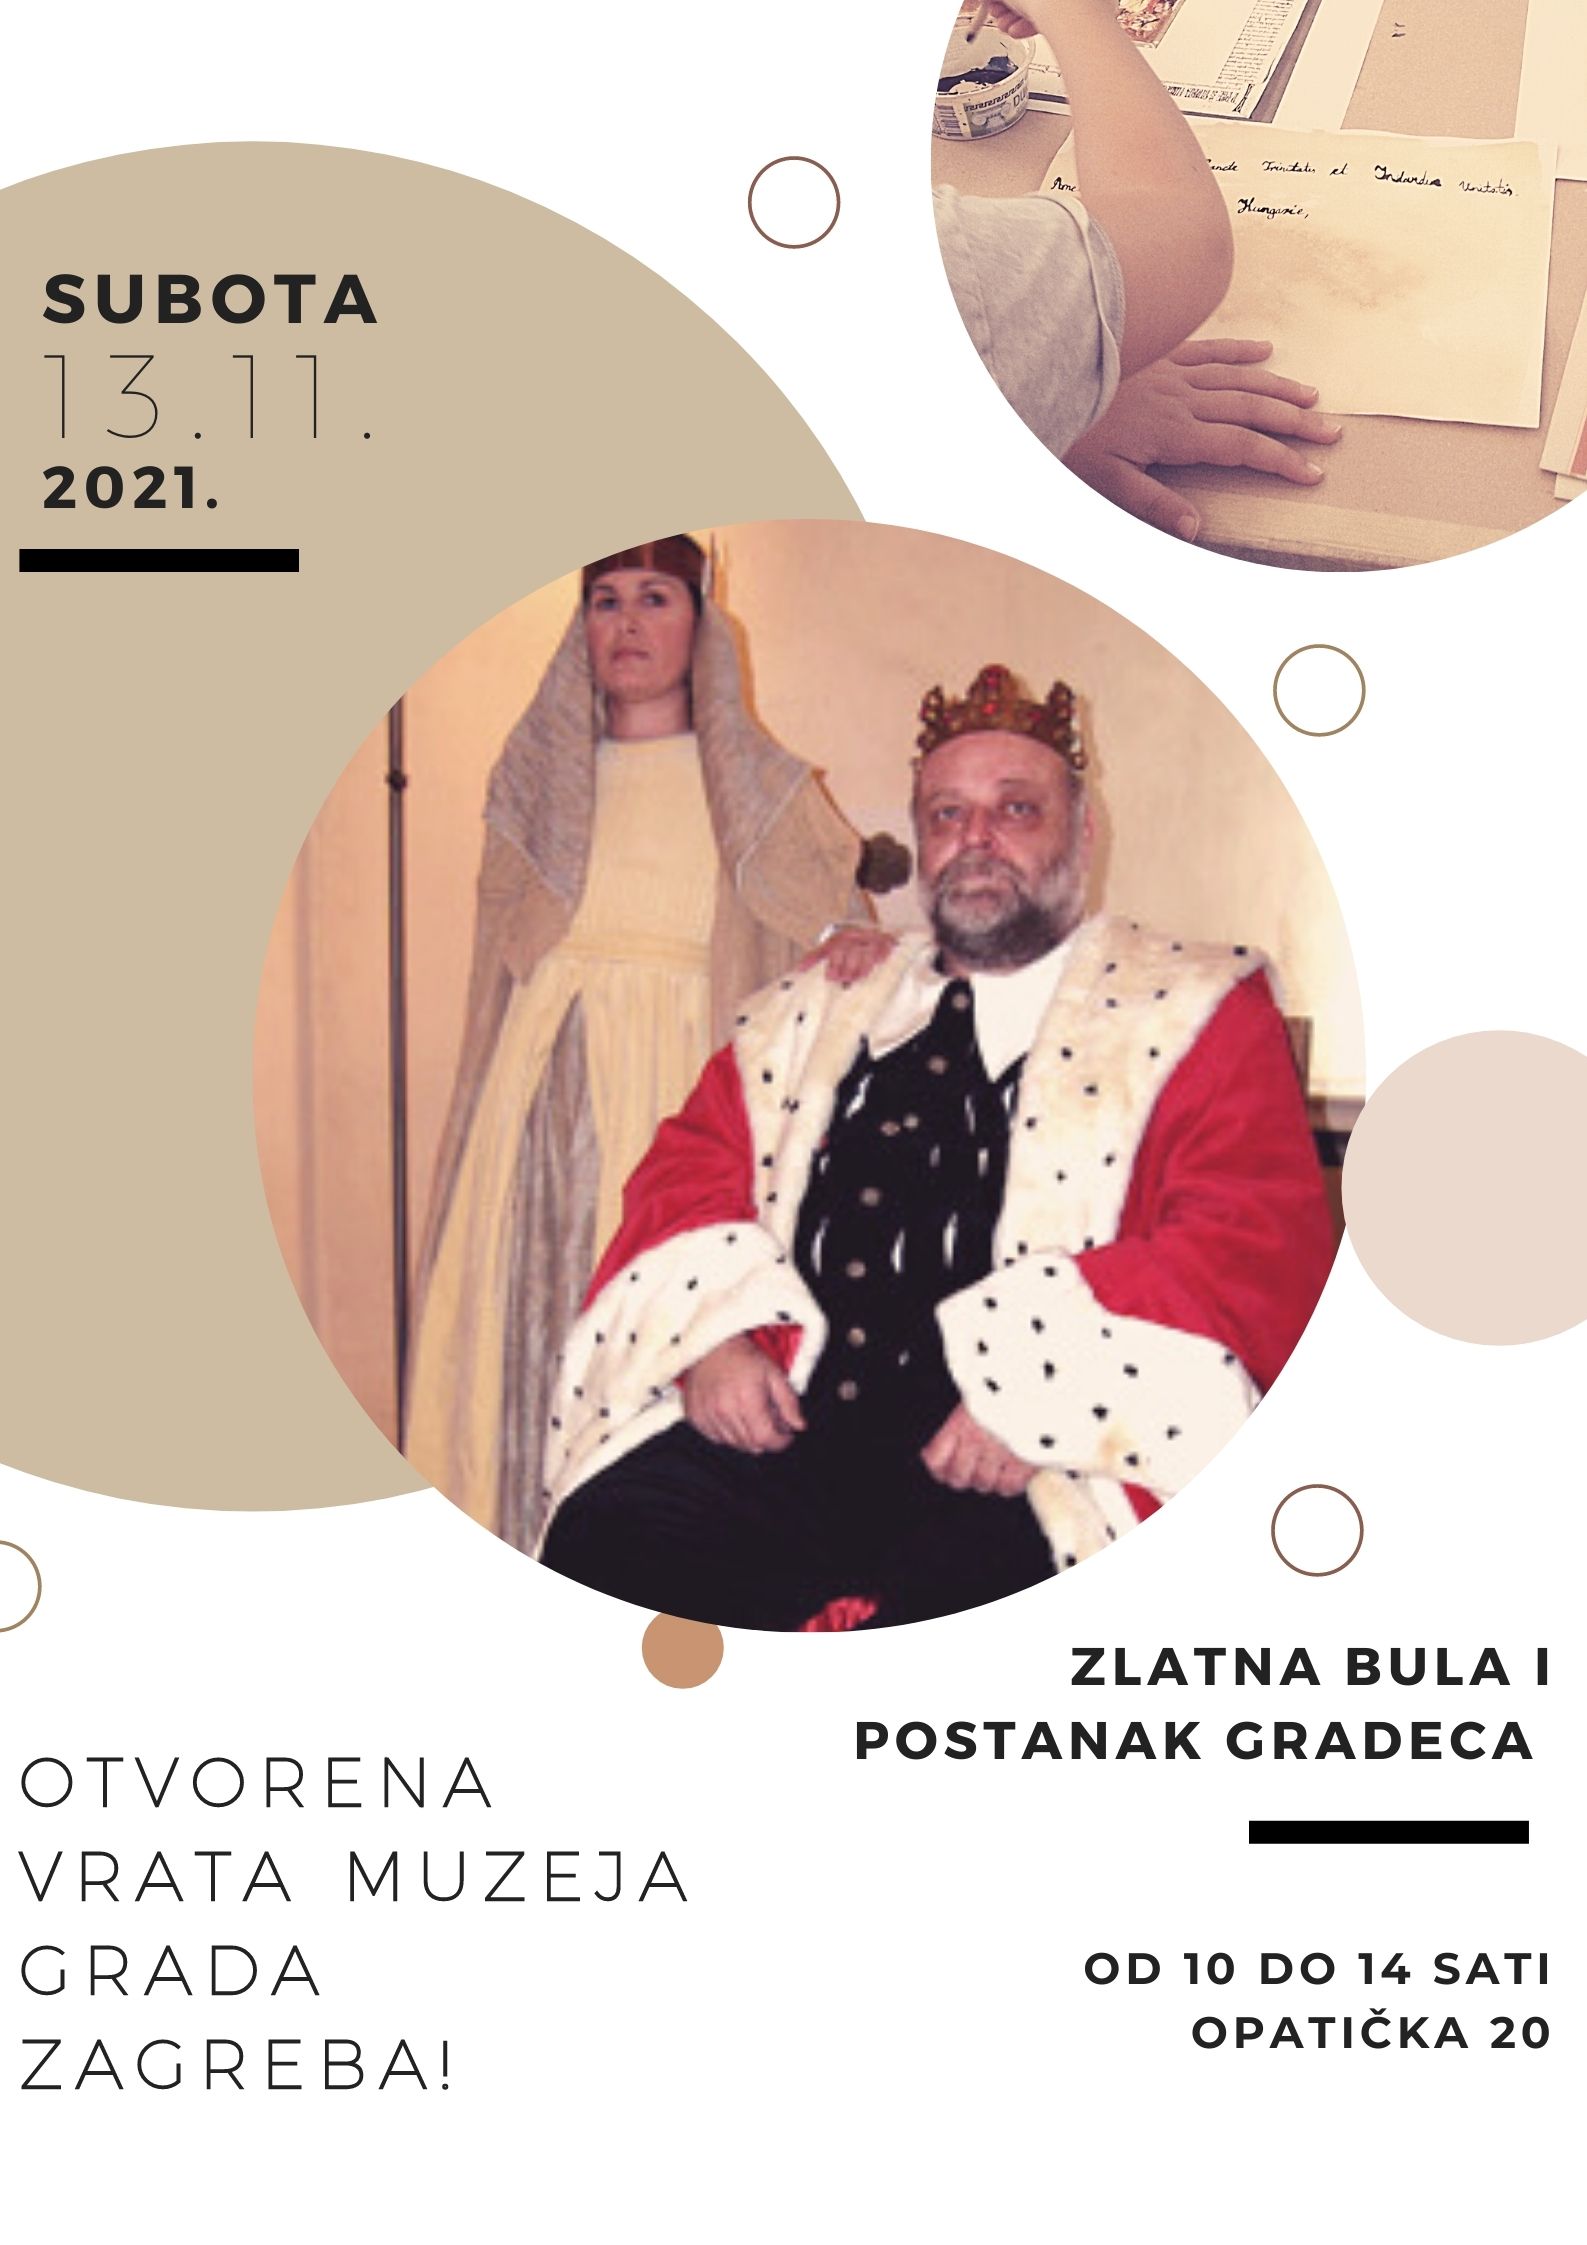 Zlatna bula i postanak Gradeca - OTVORENA VRATA Muzeja grada Zagreba!